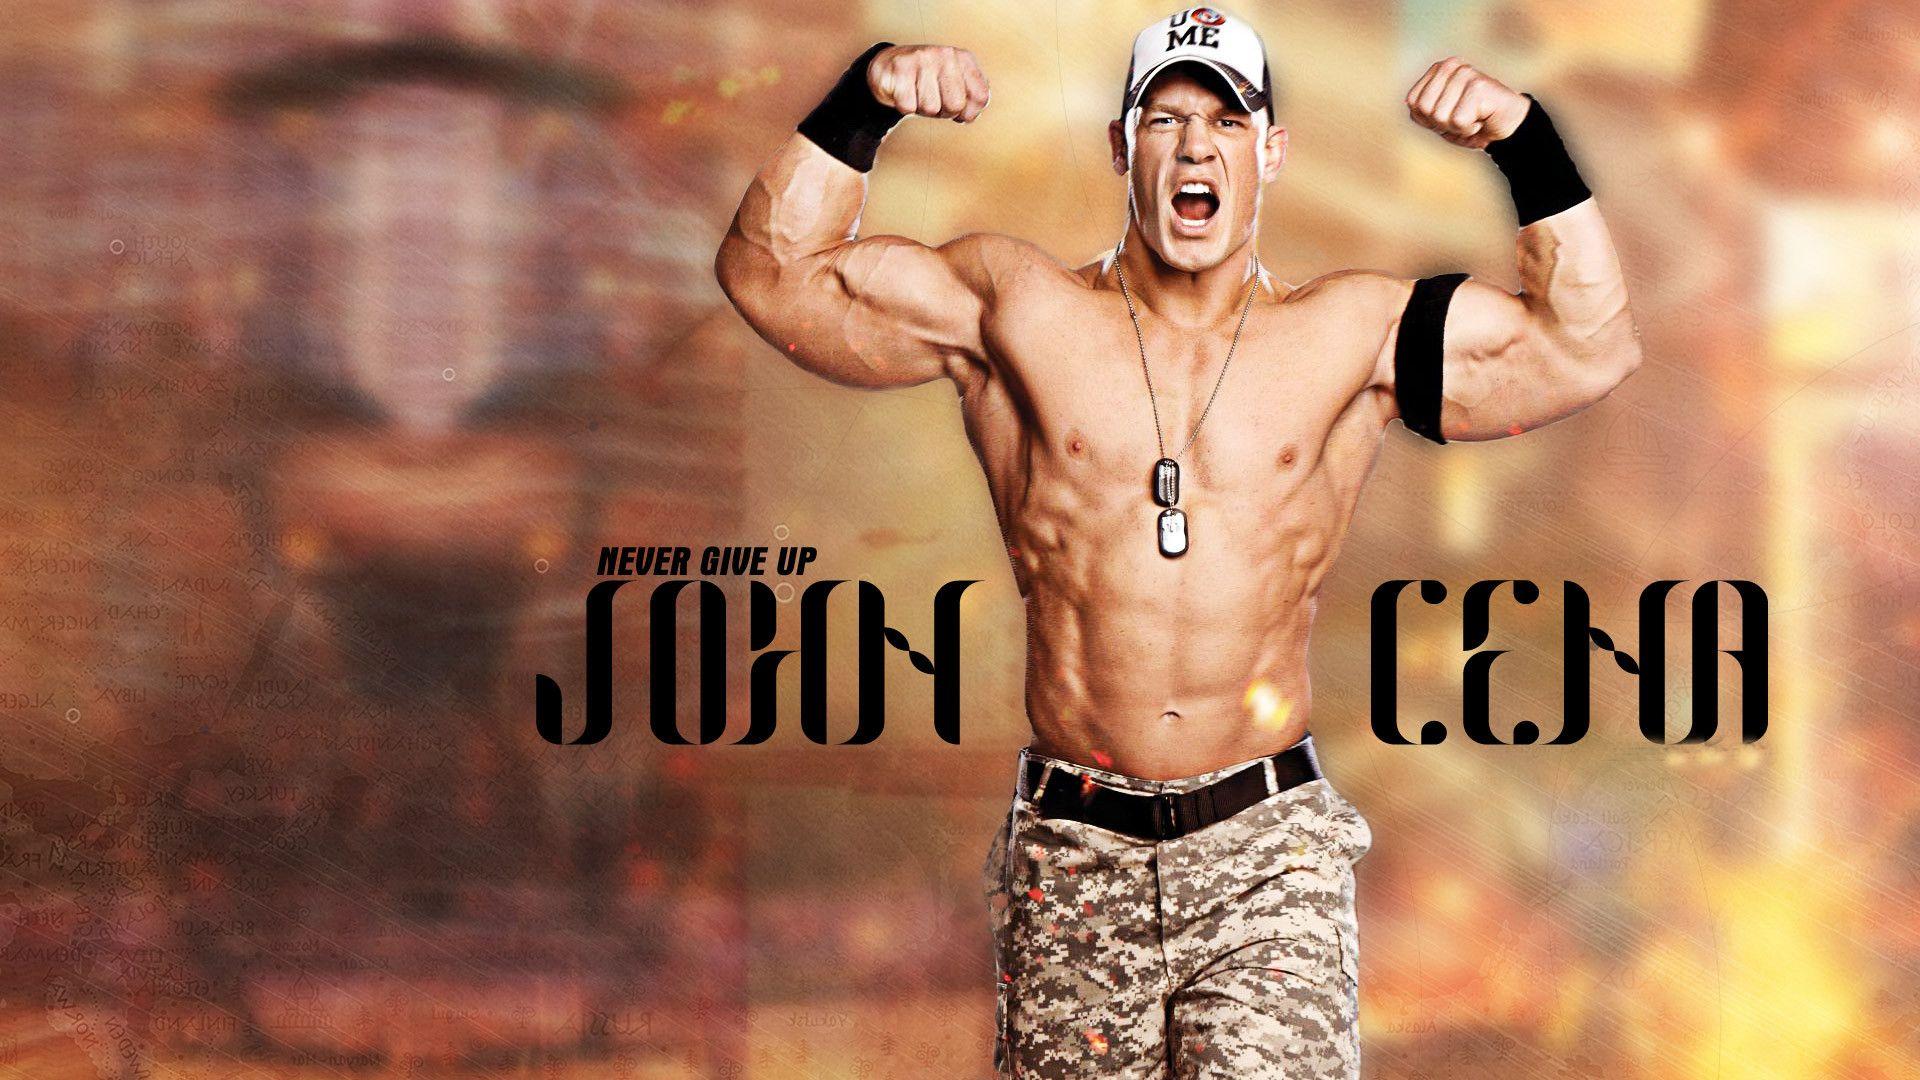 John Cena HD Wallpaper for PC & Mac, Laptop, Tablet, Mobile Phone